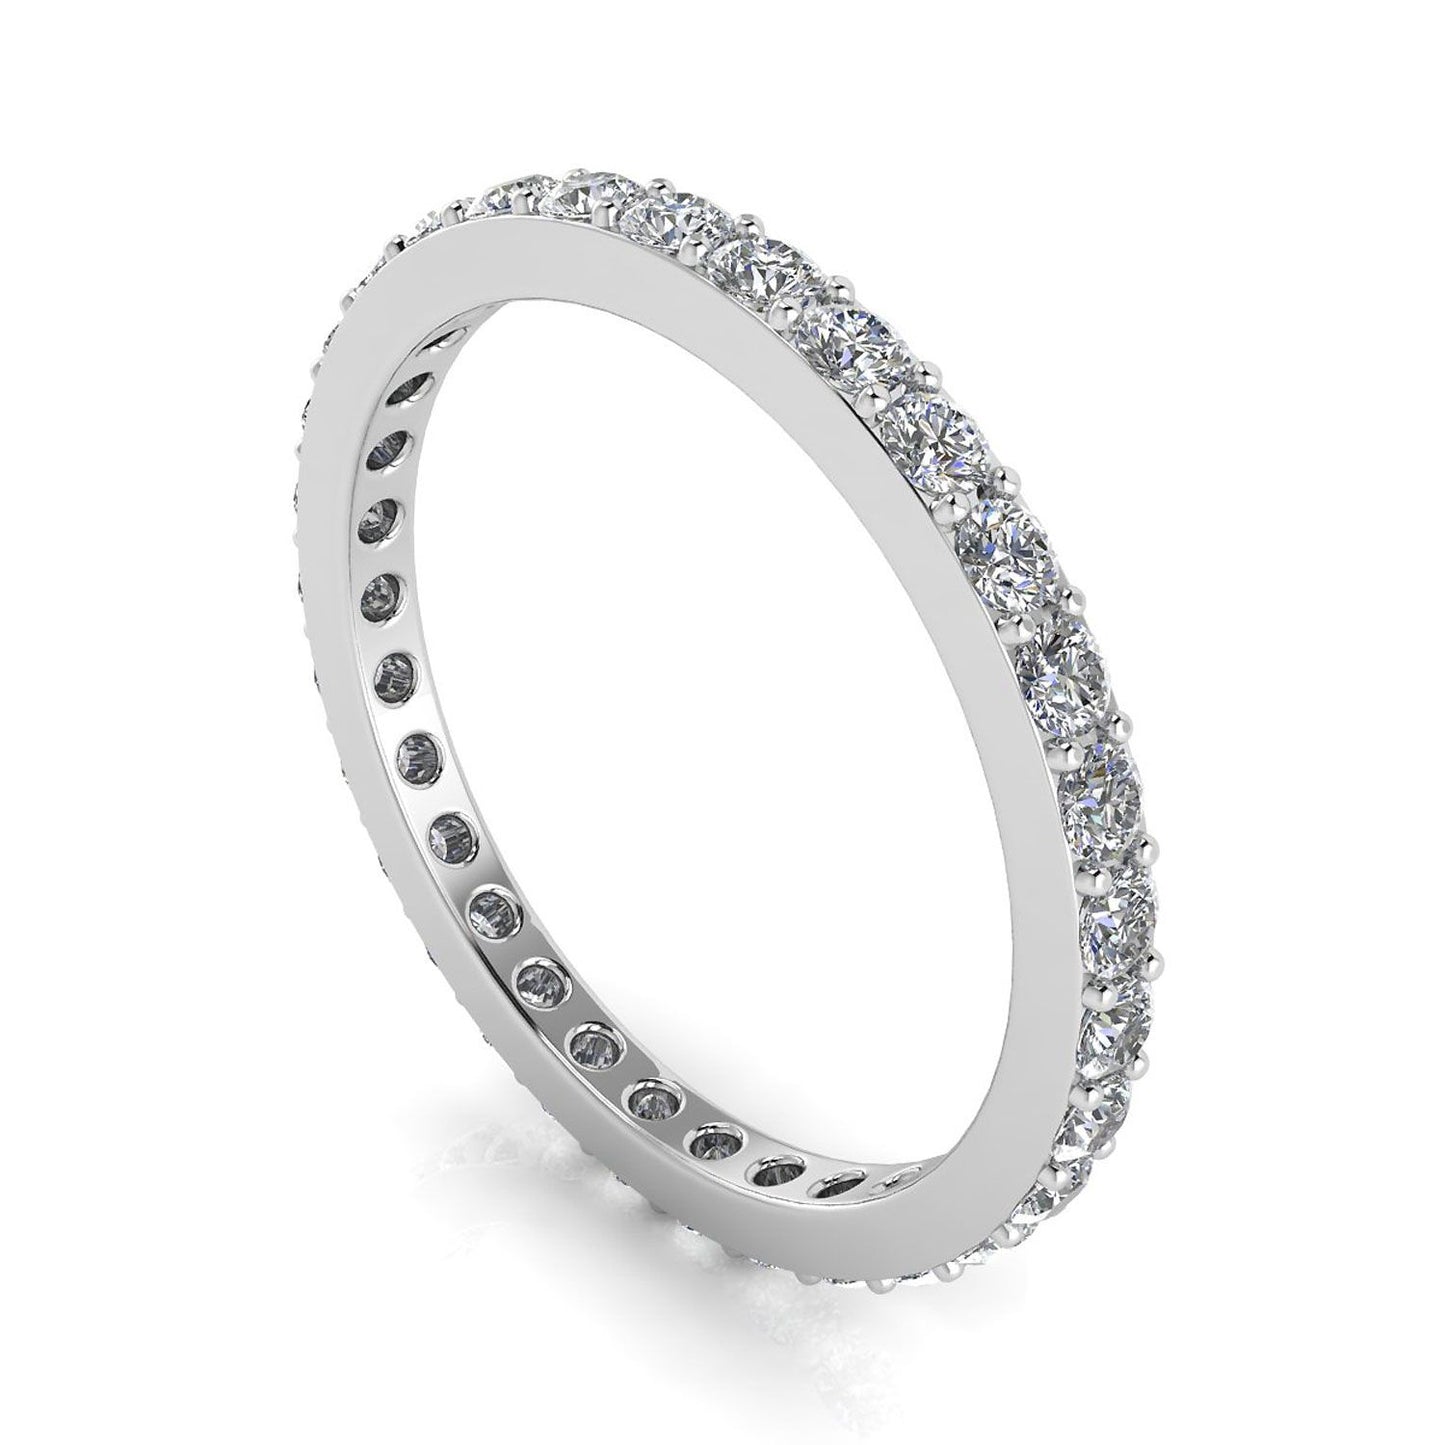 Round Brilliant Cut Diamond Pave Set Eternity Ring In Platinum  (0.72ct. Tw.) Ring Size 7.5